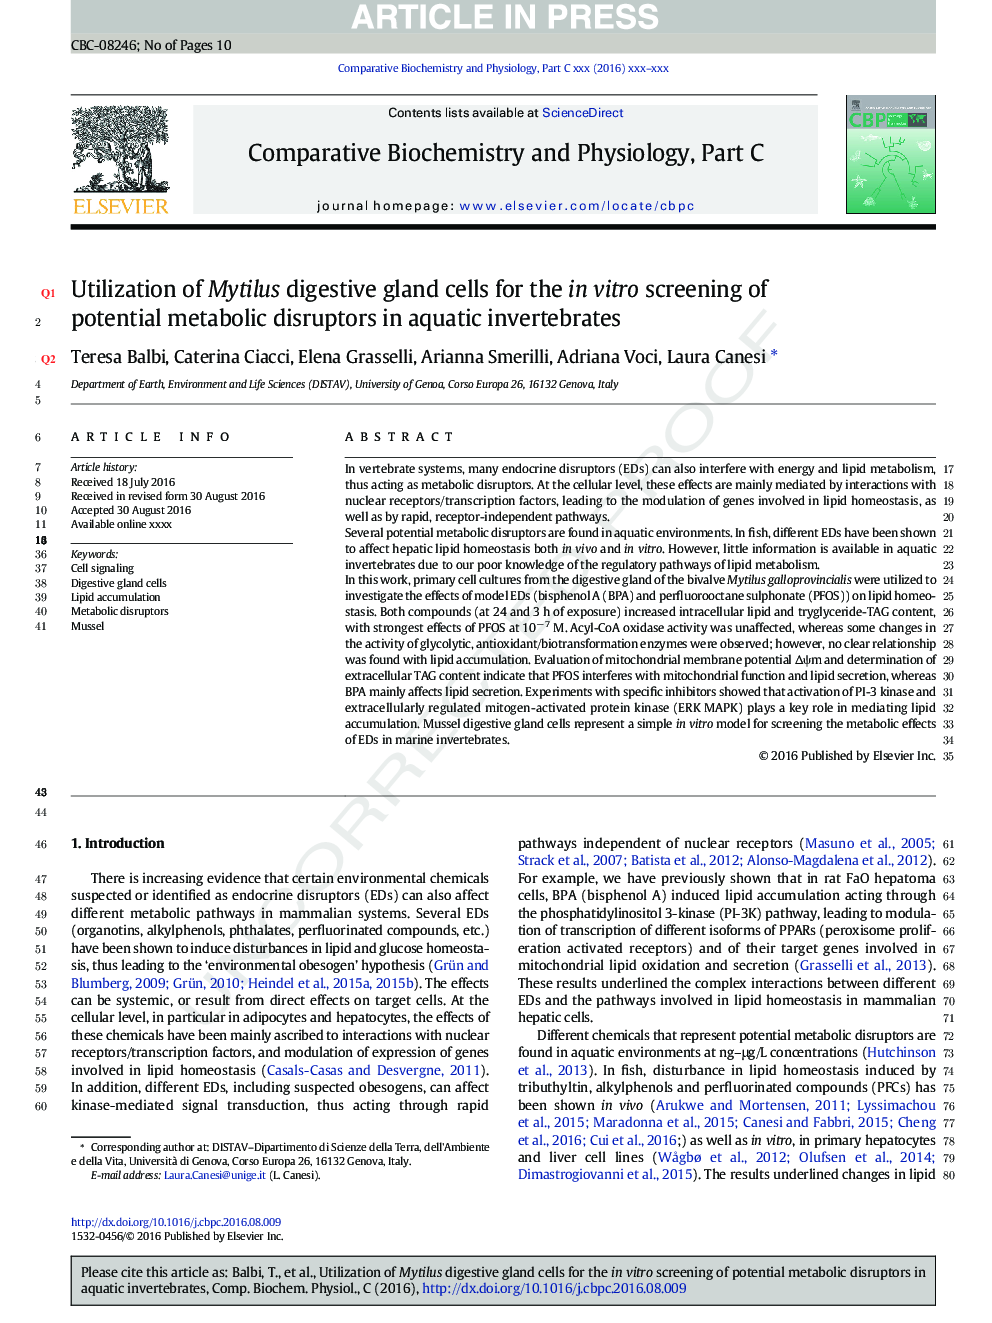 Utilization of Mytilus digestive gland cells for the in vitro screening of potential metabolic disruptors in aquatic invertebrates